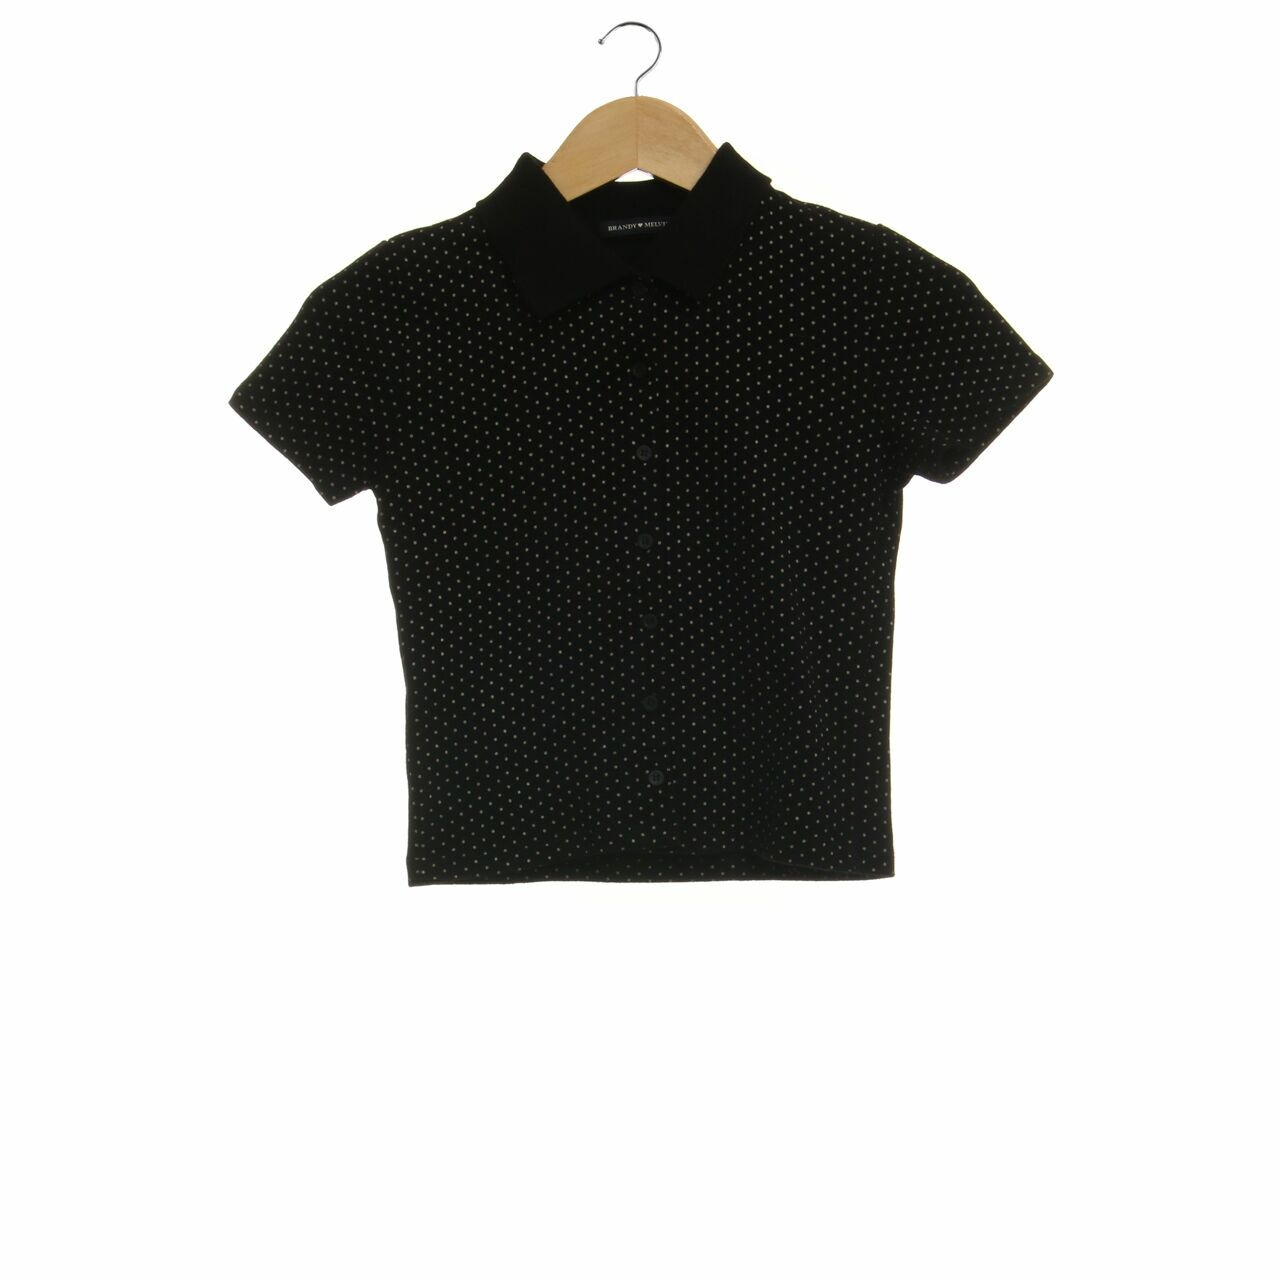 Brandy Melville Black Polkadots Polo T-Shirt